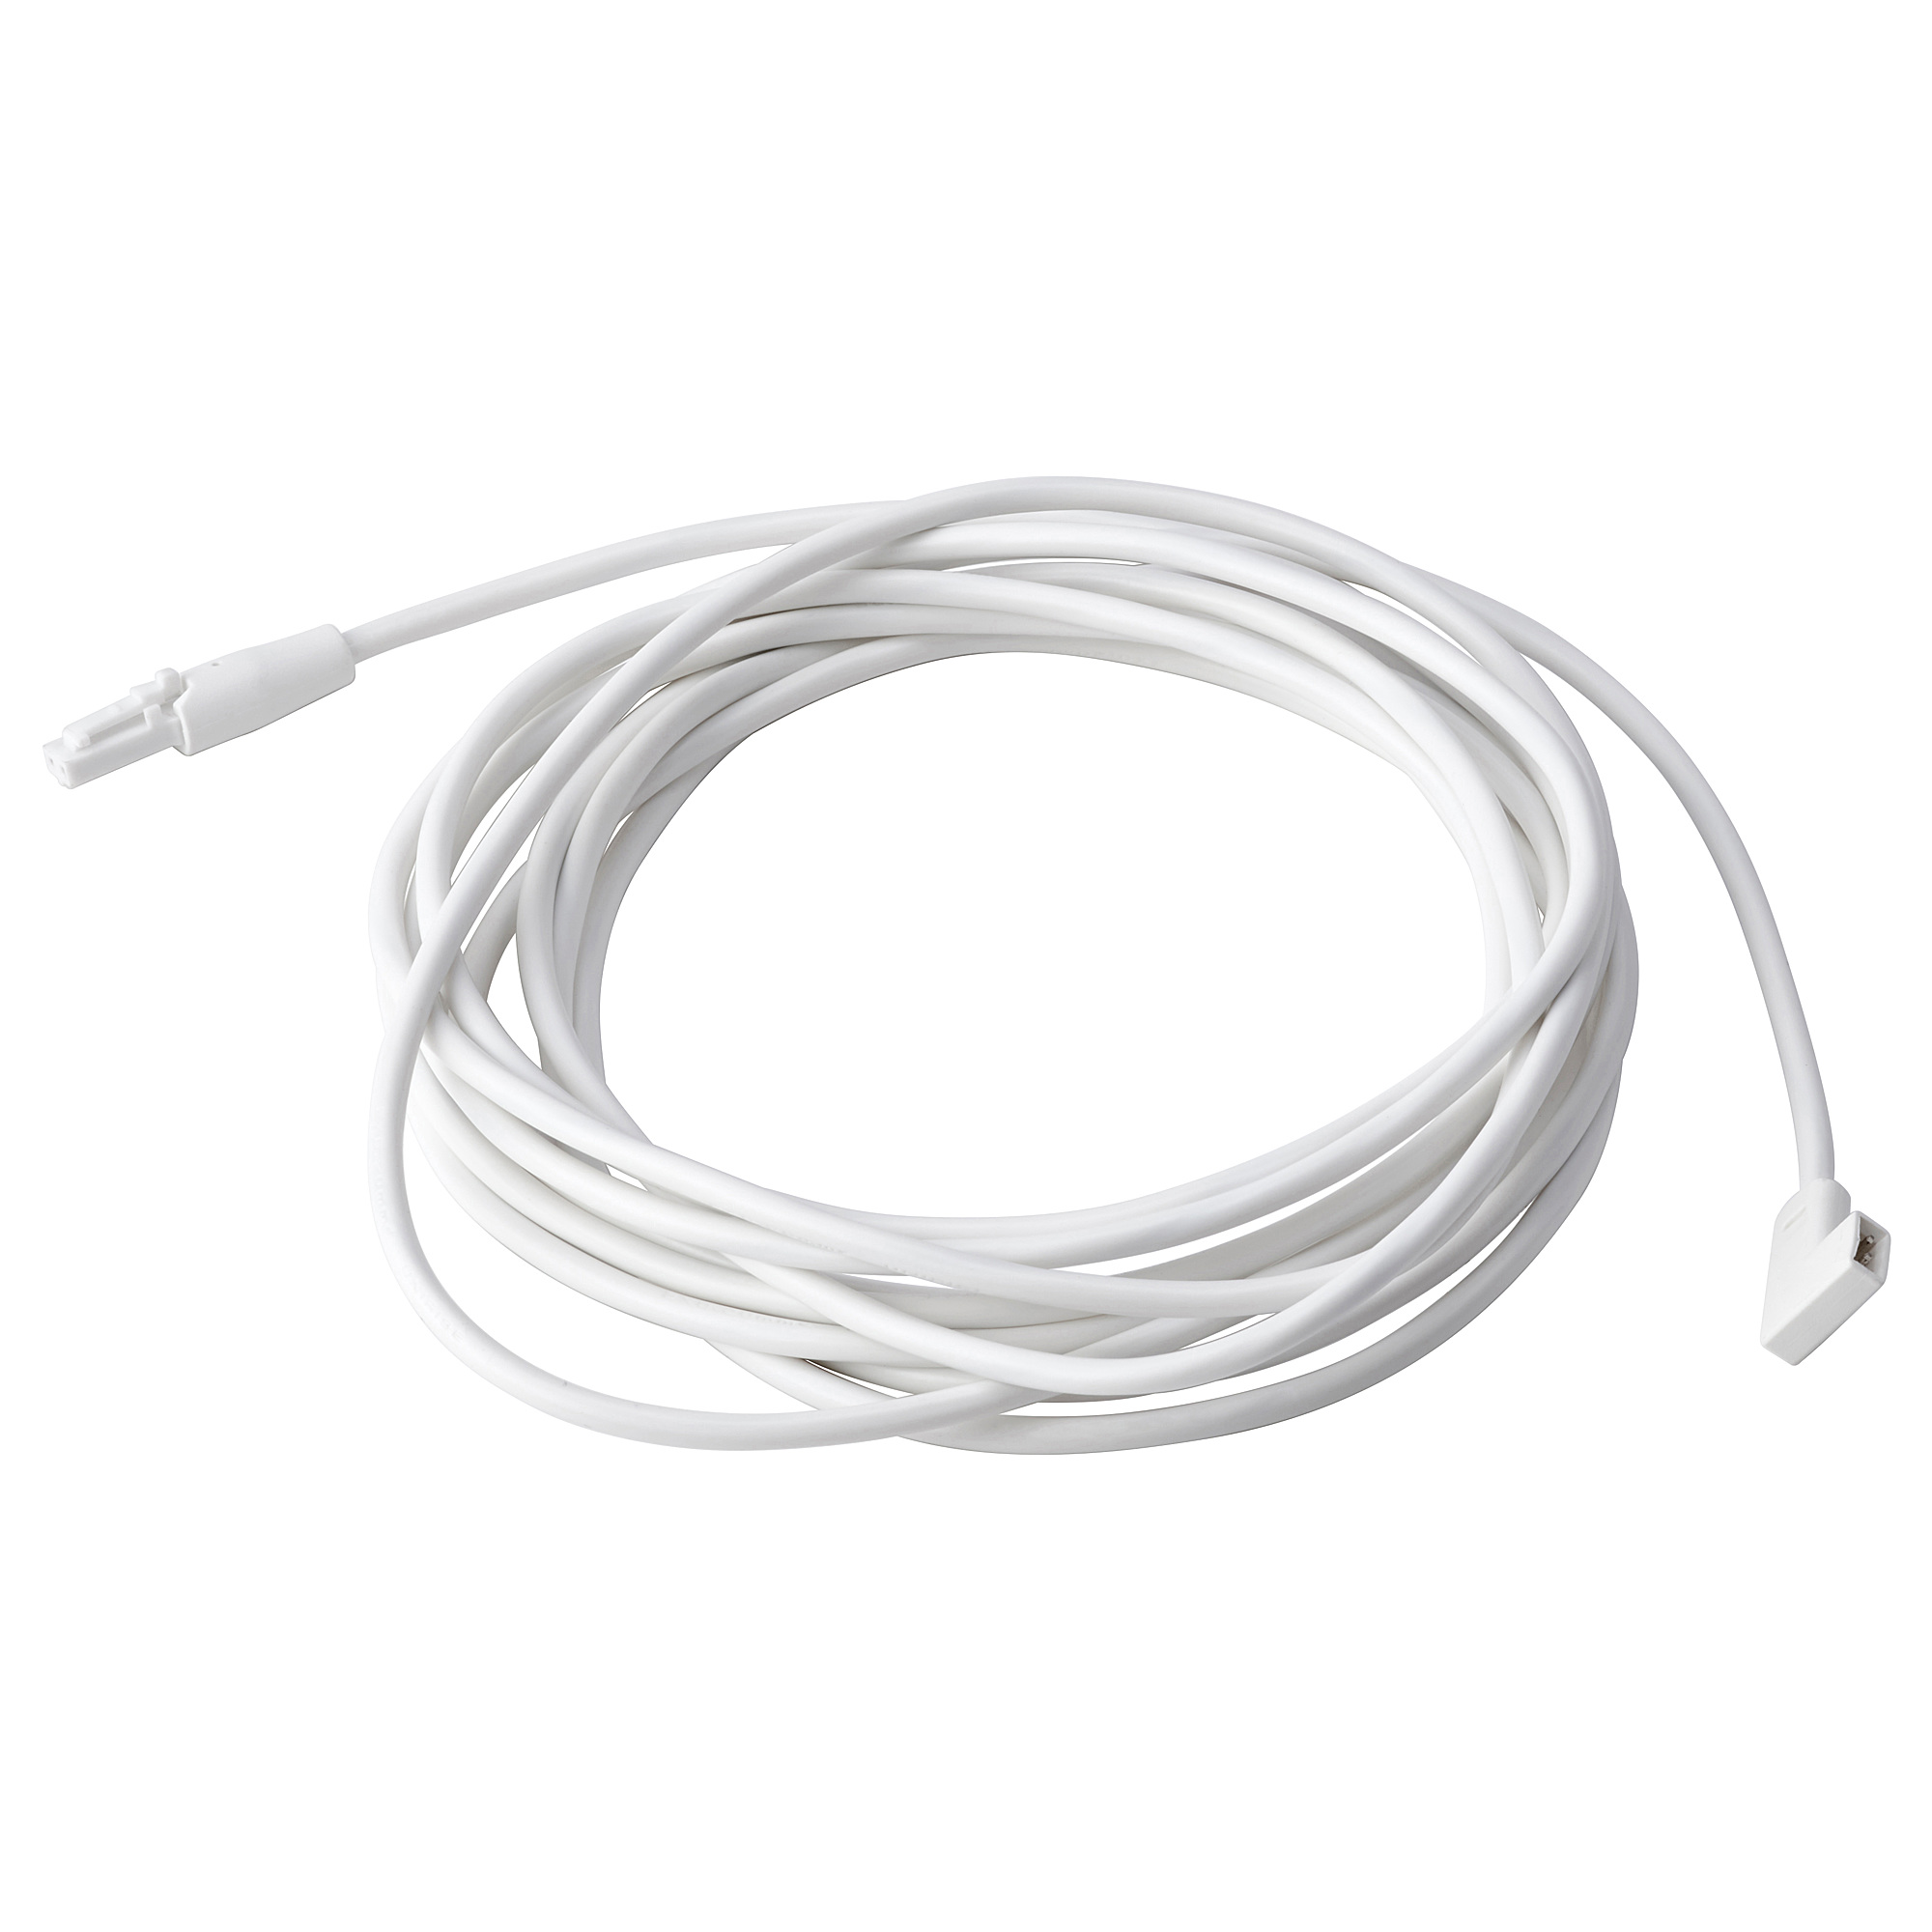 VÅGDAL connection cord